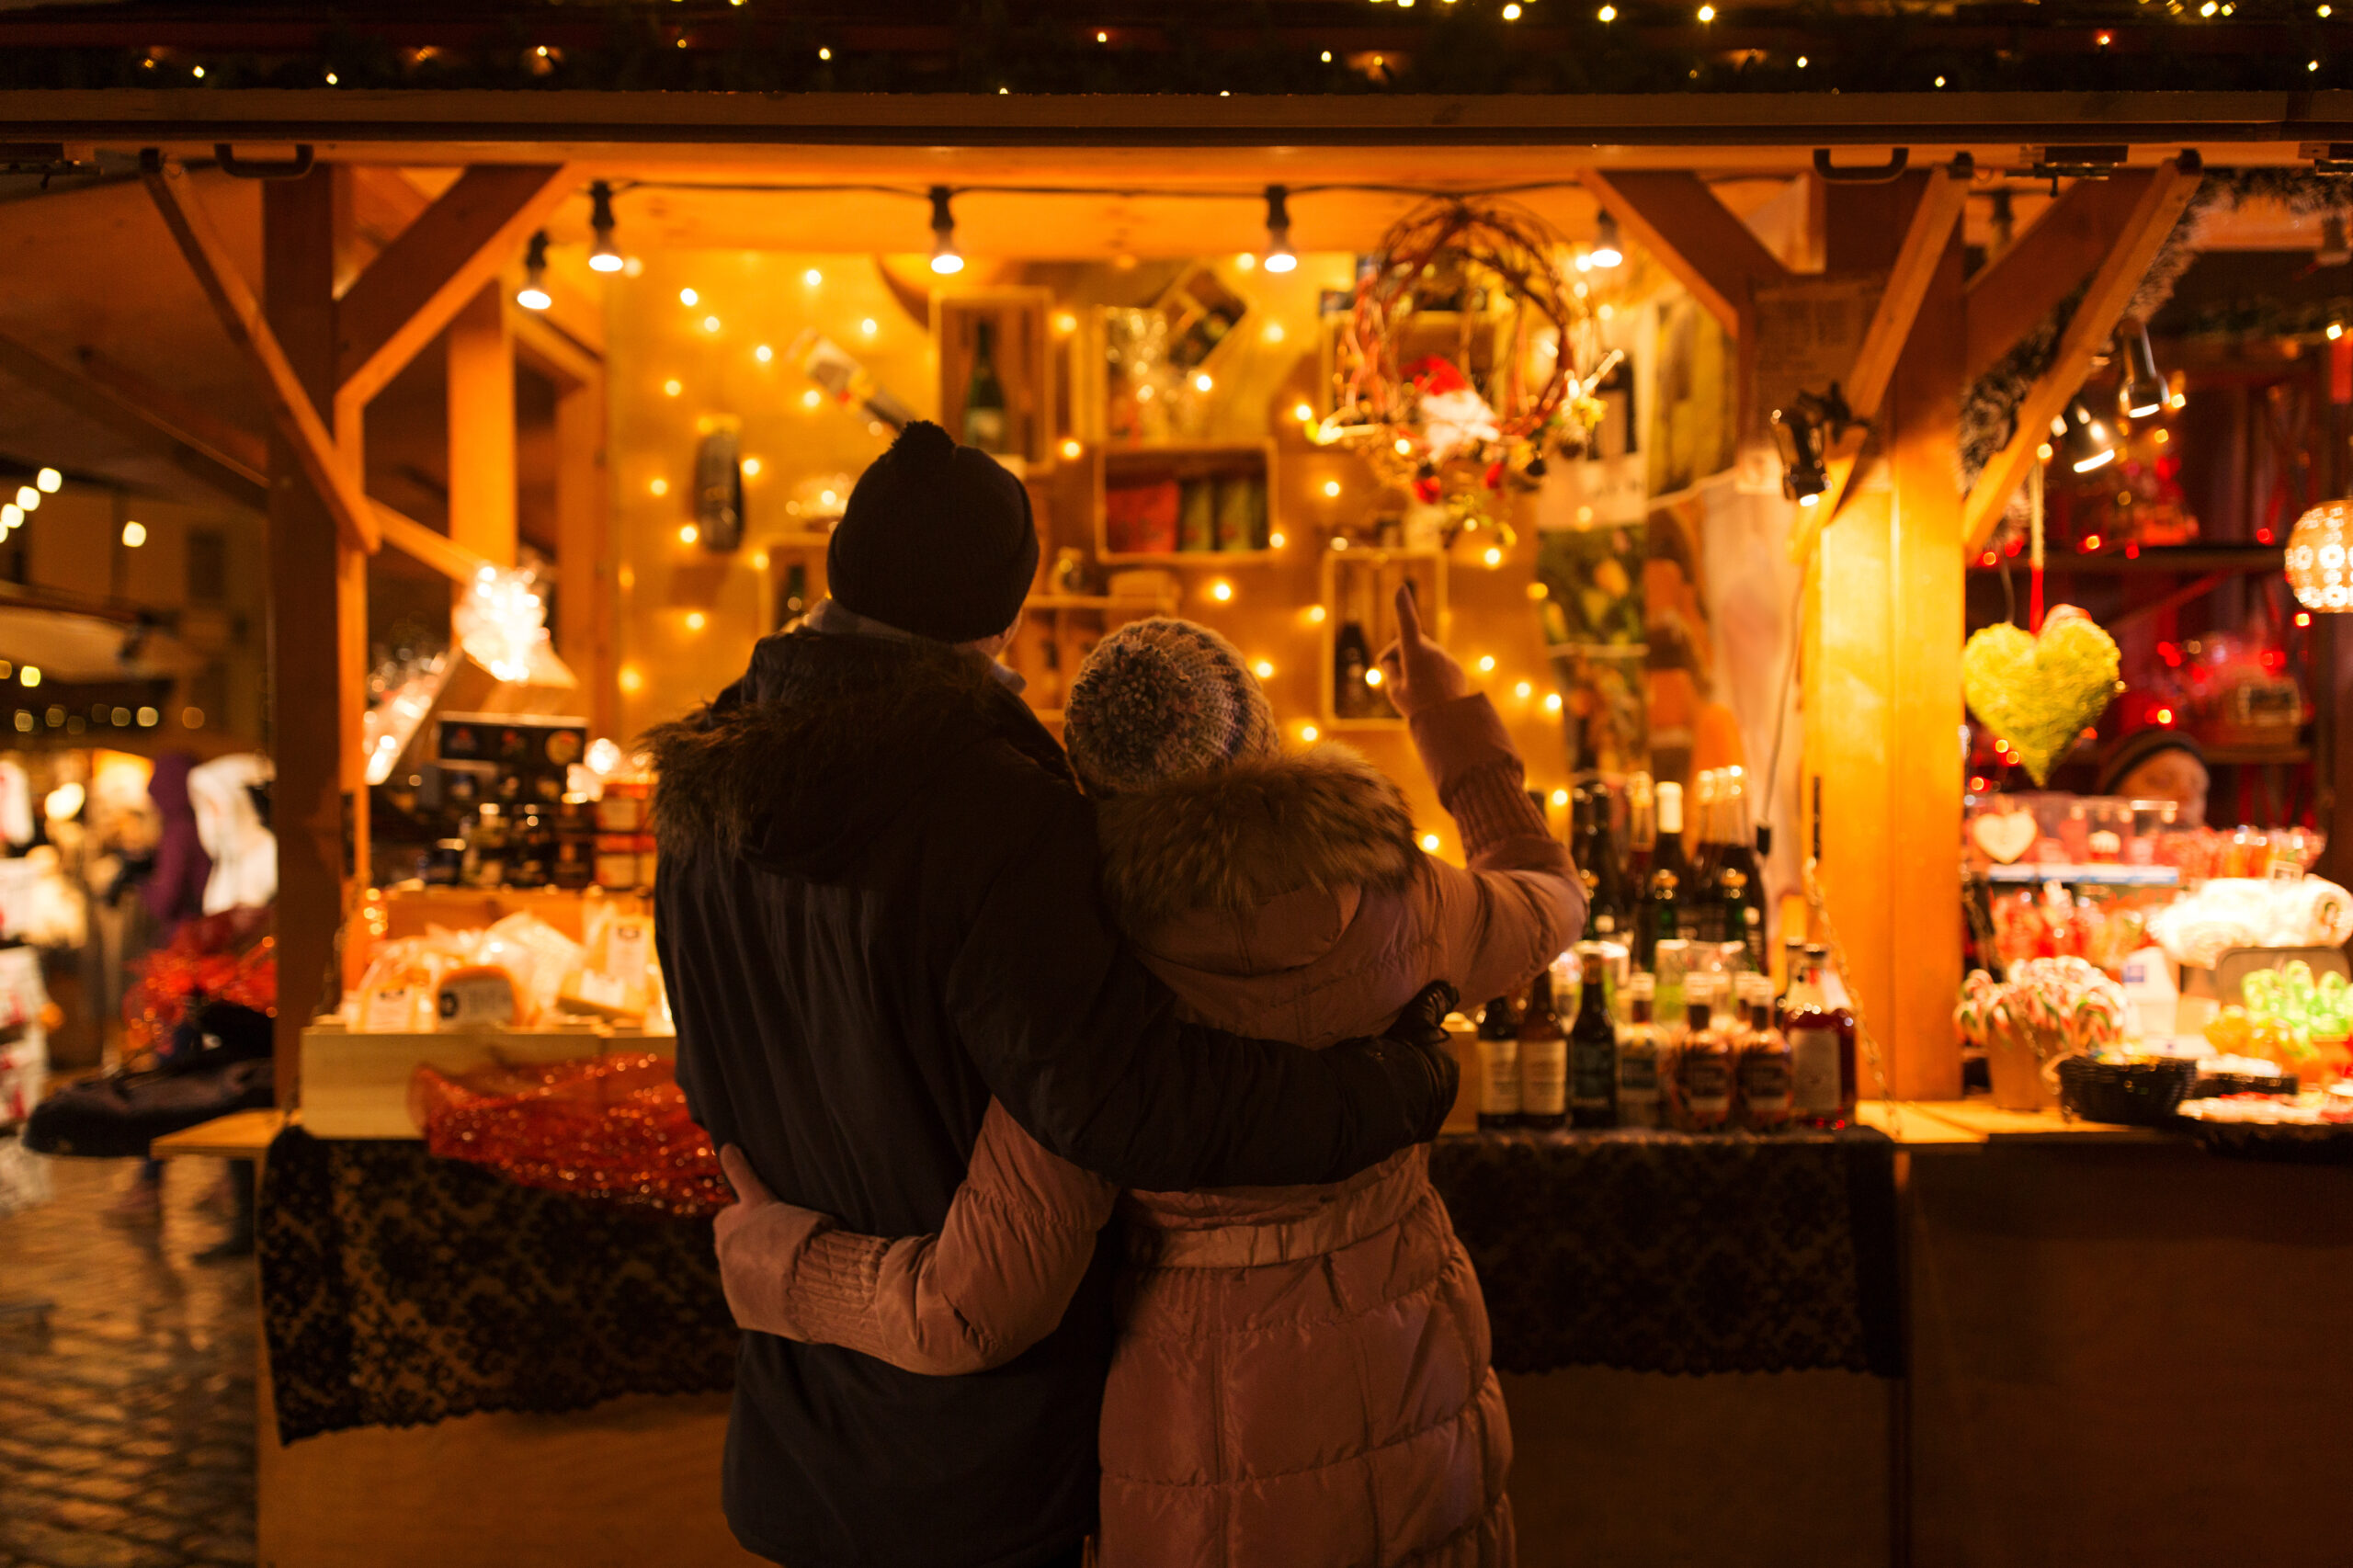 happy senior couple hugging at christmas market